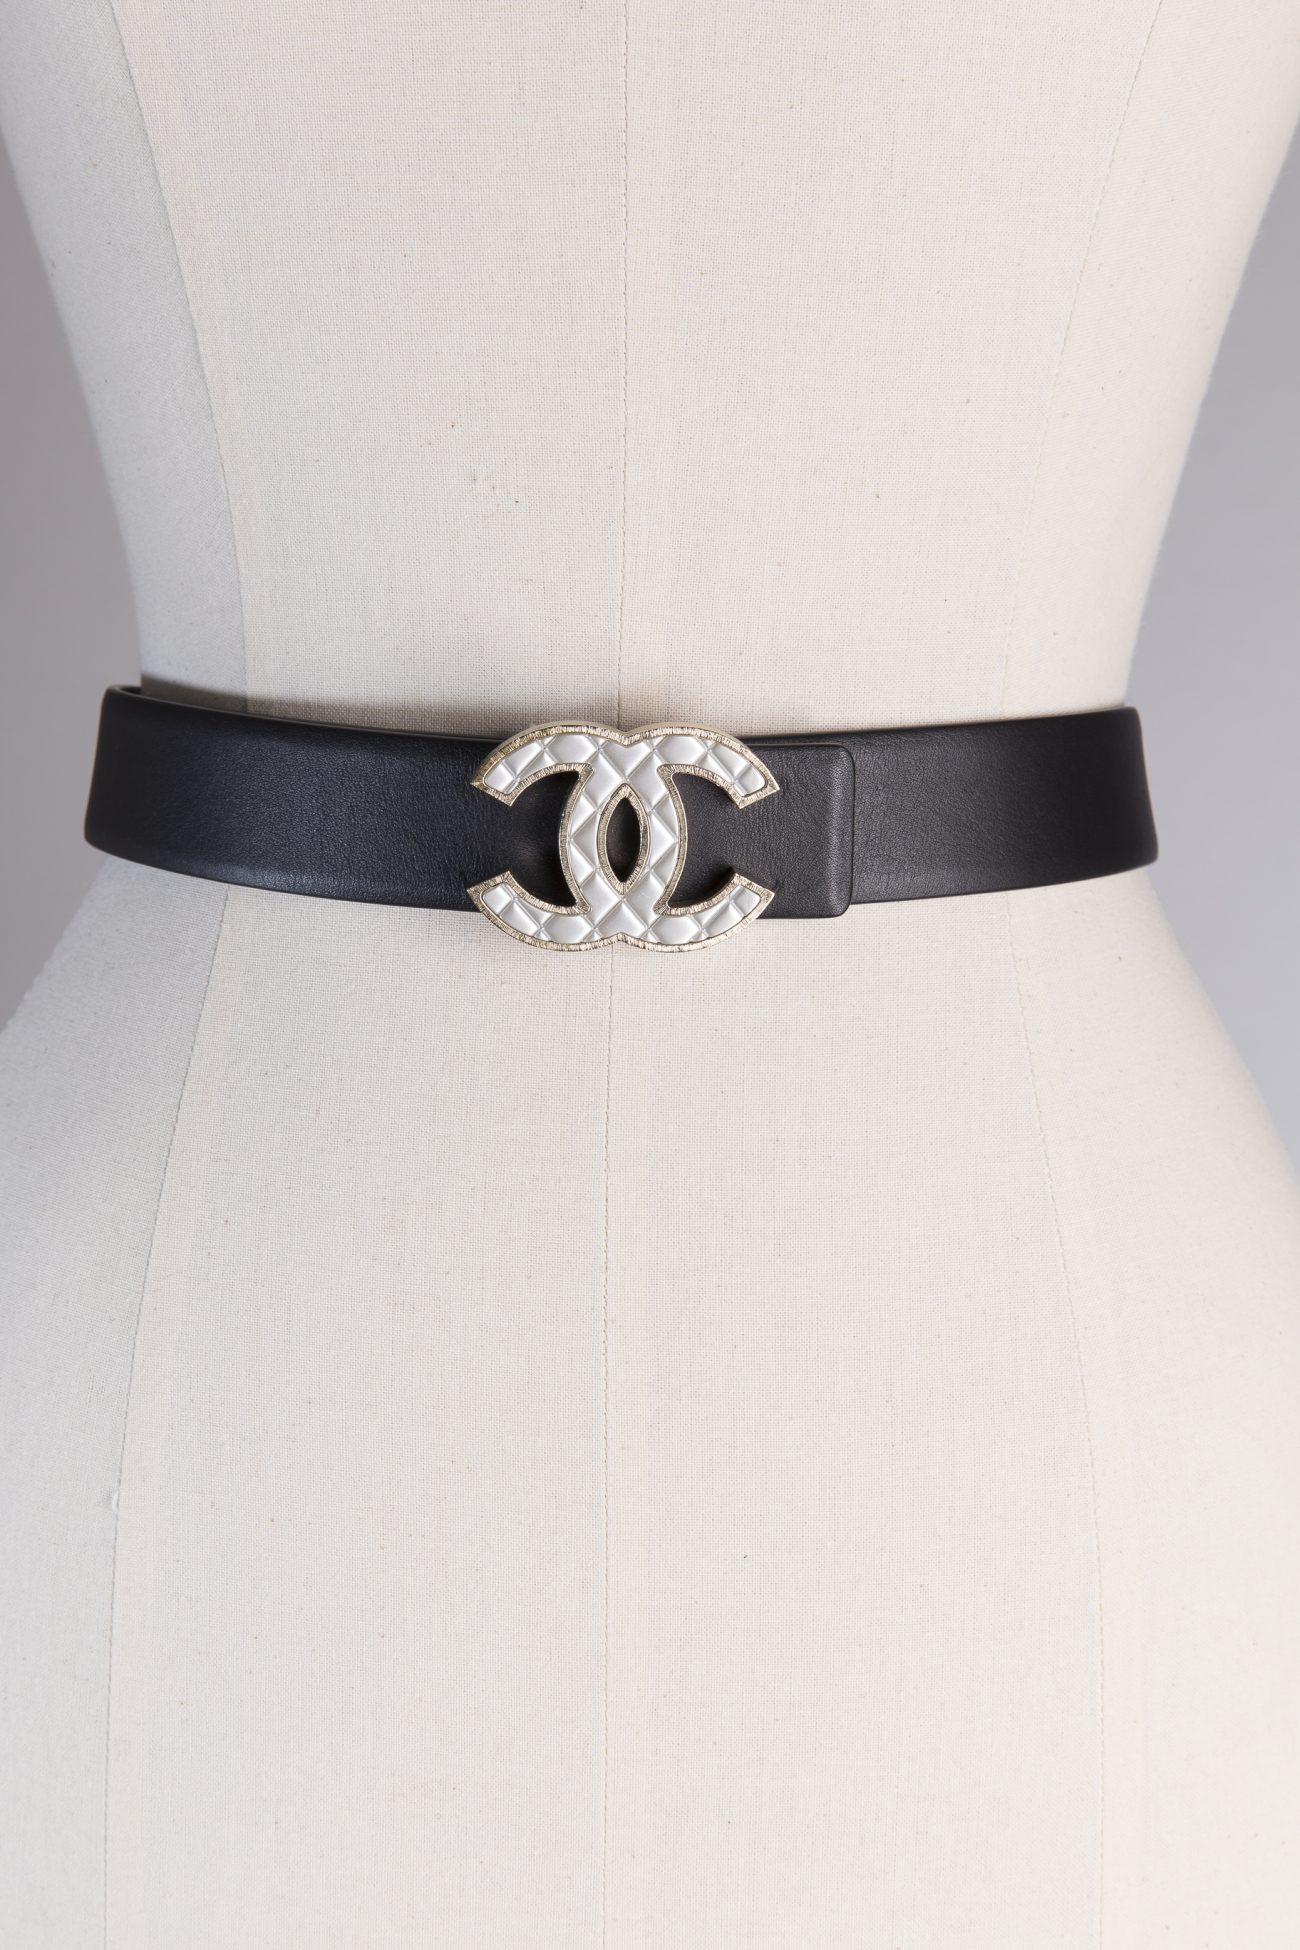 Chanel Belt - Huntessa Luxury Online Boutique